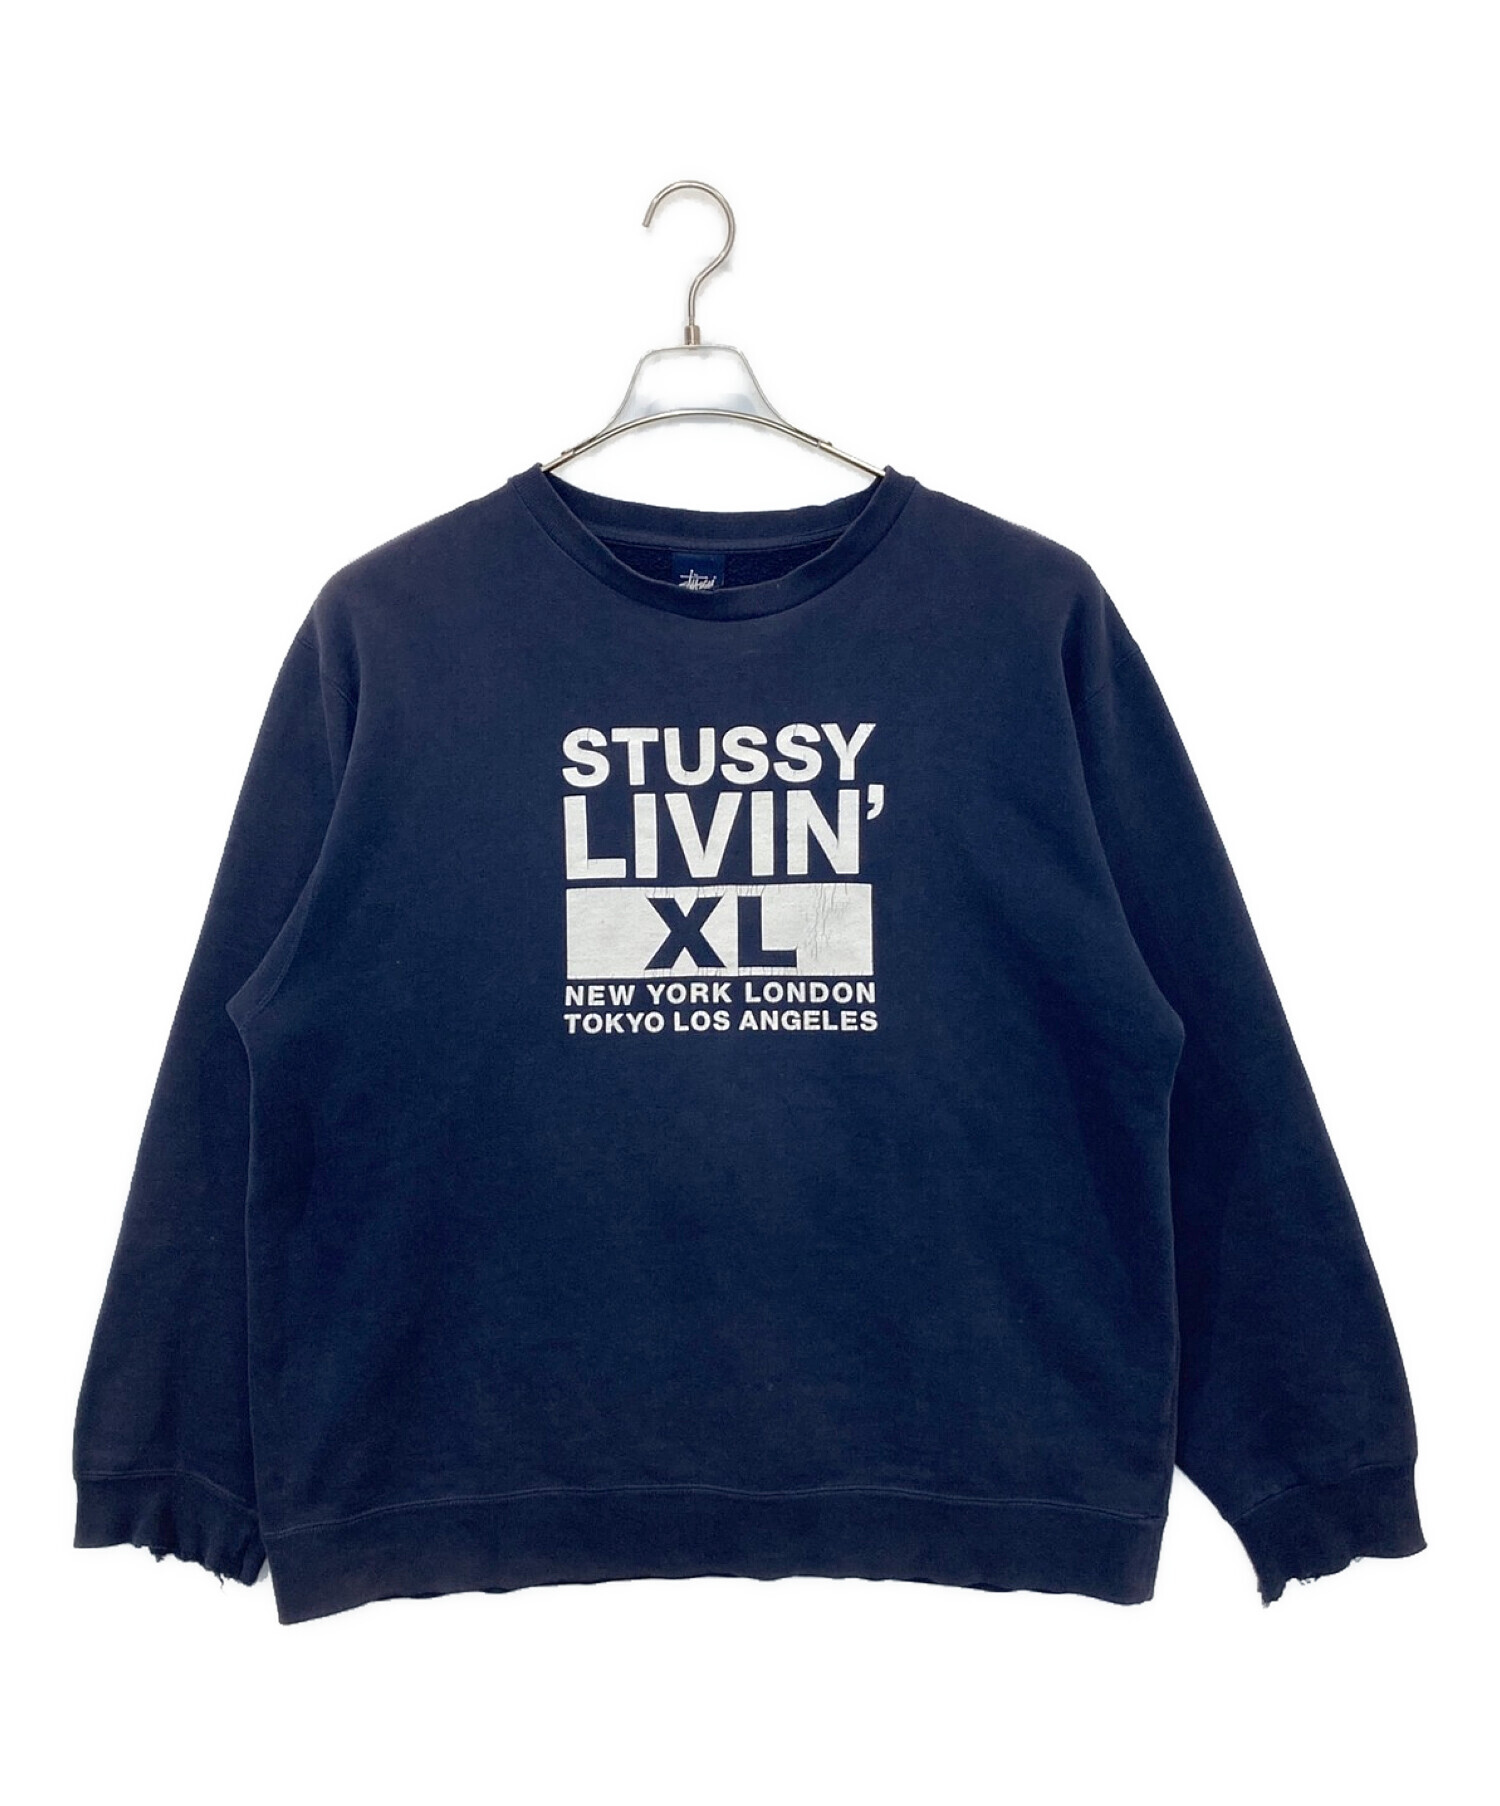 stussy (ステューシー) ロゴスウェット ネイビー サイズ:L